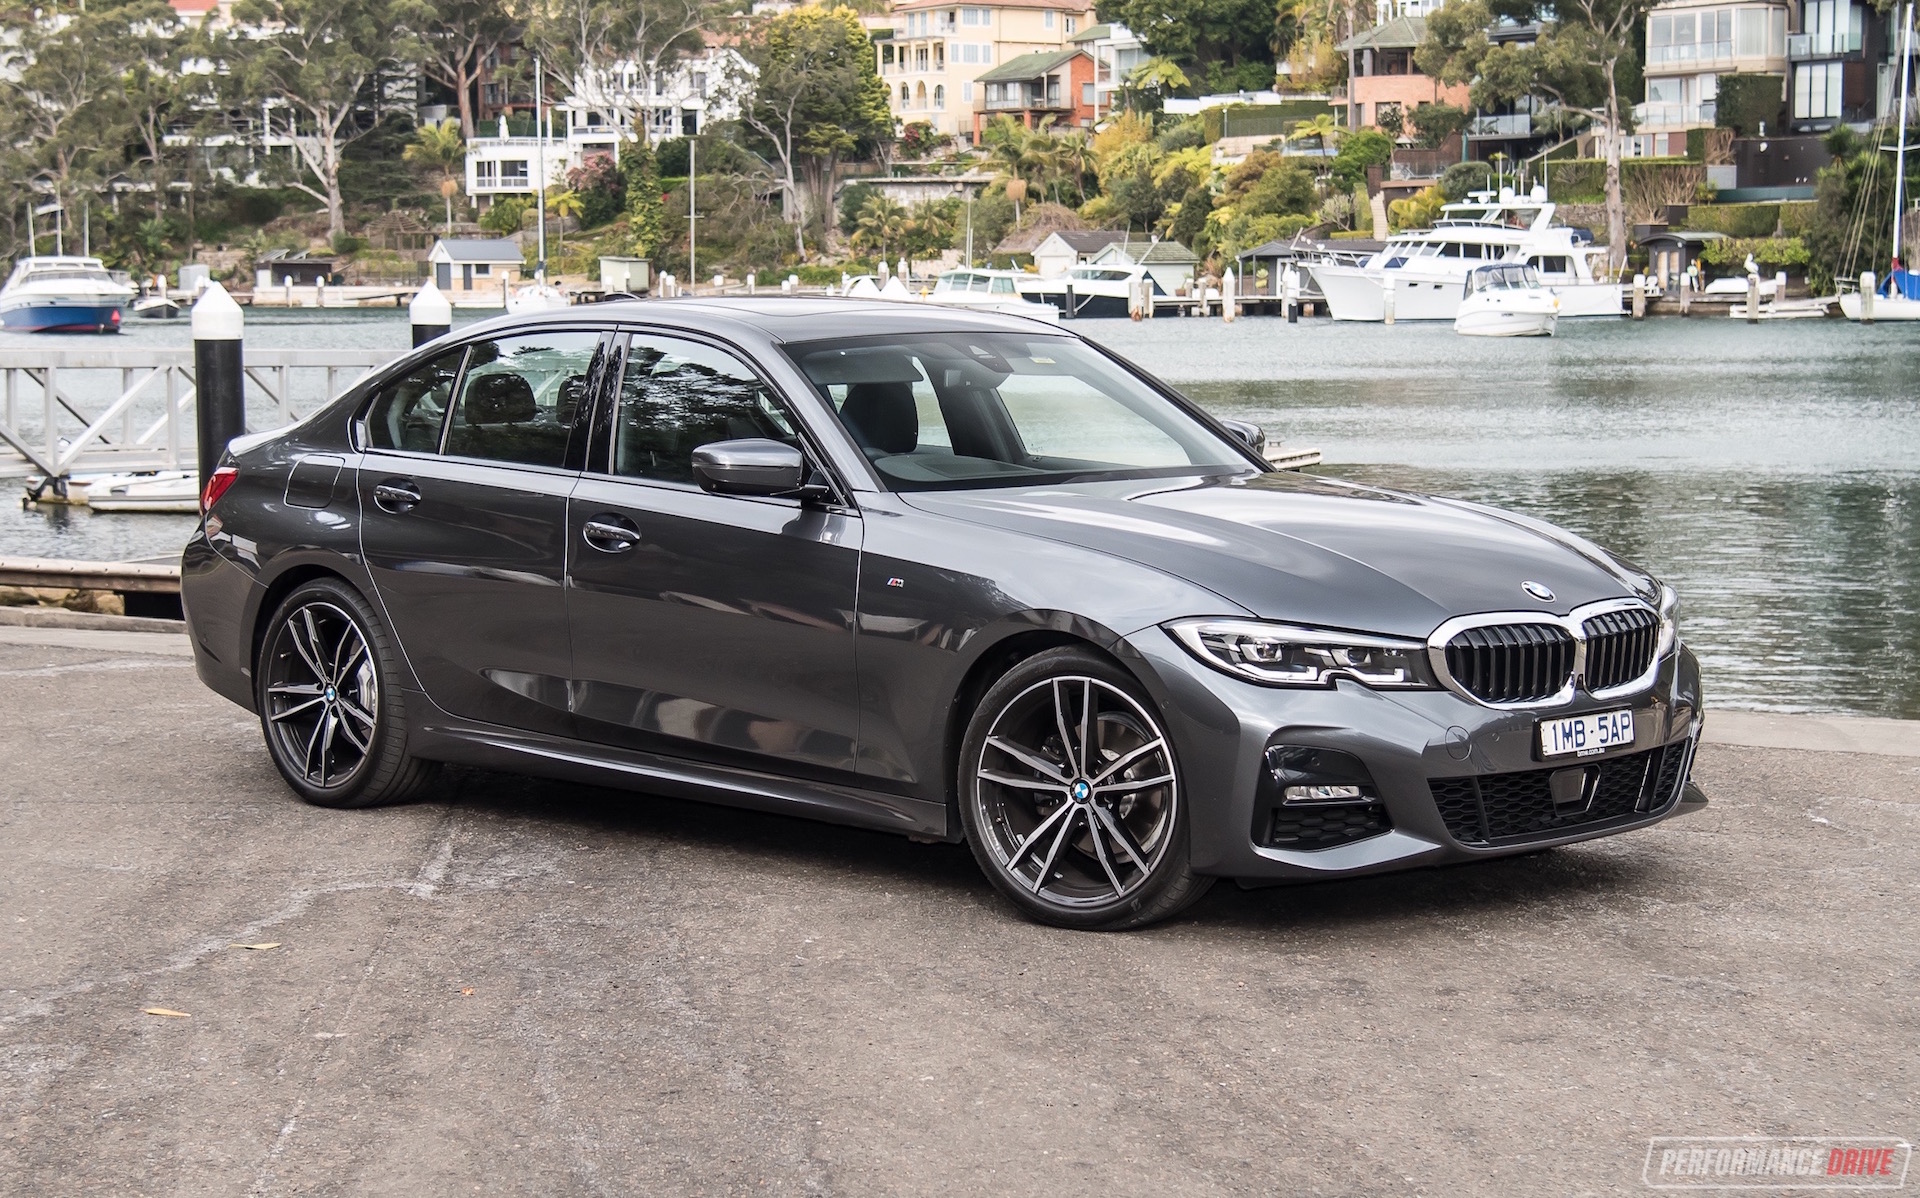 2019 BMW 320d M Sport review (video) PerformanceDrive